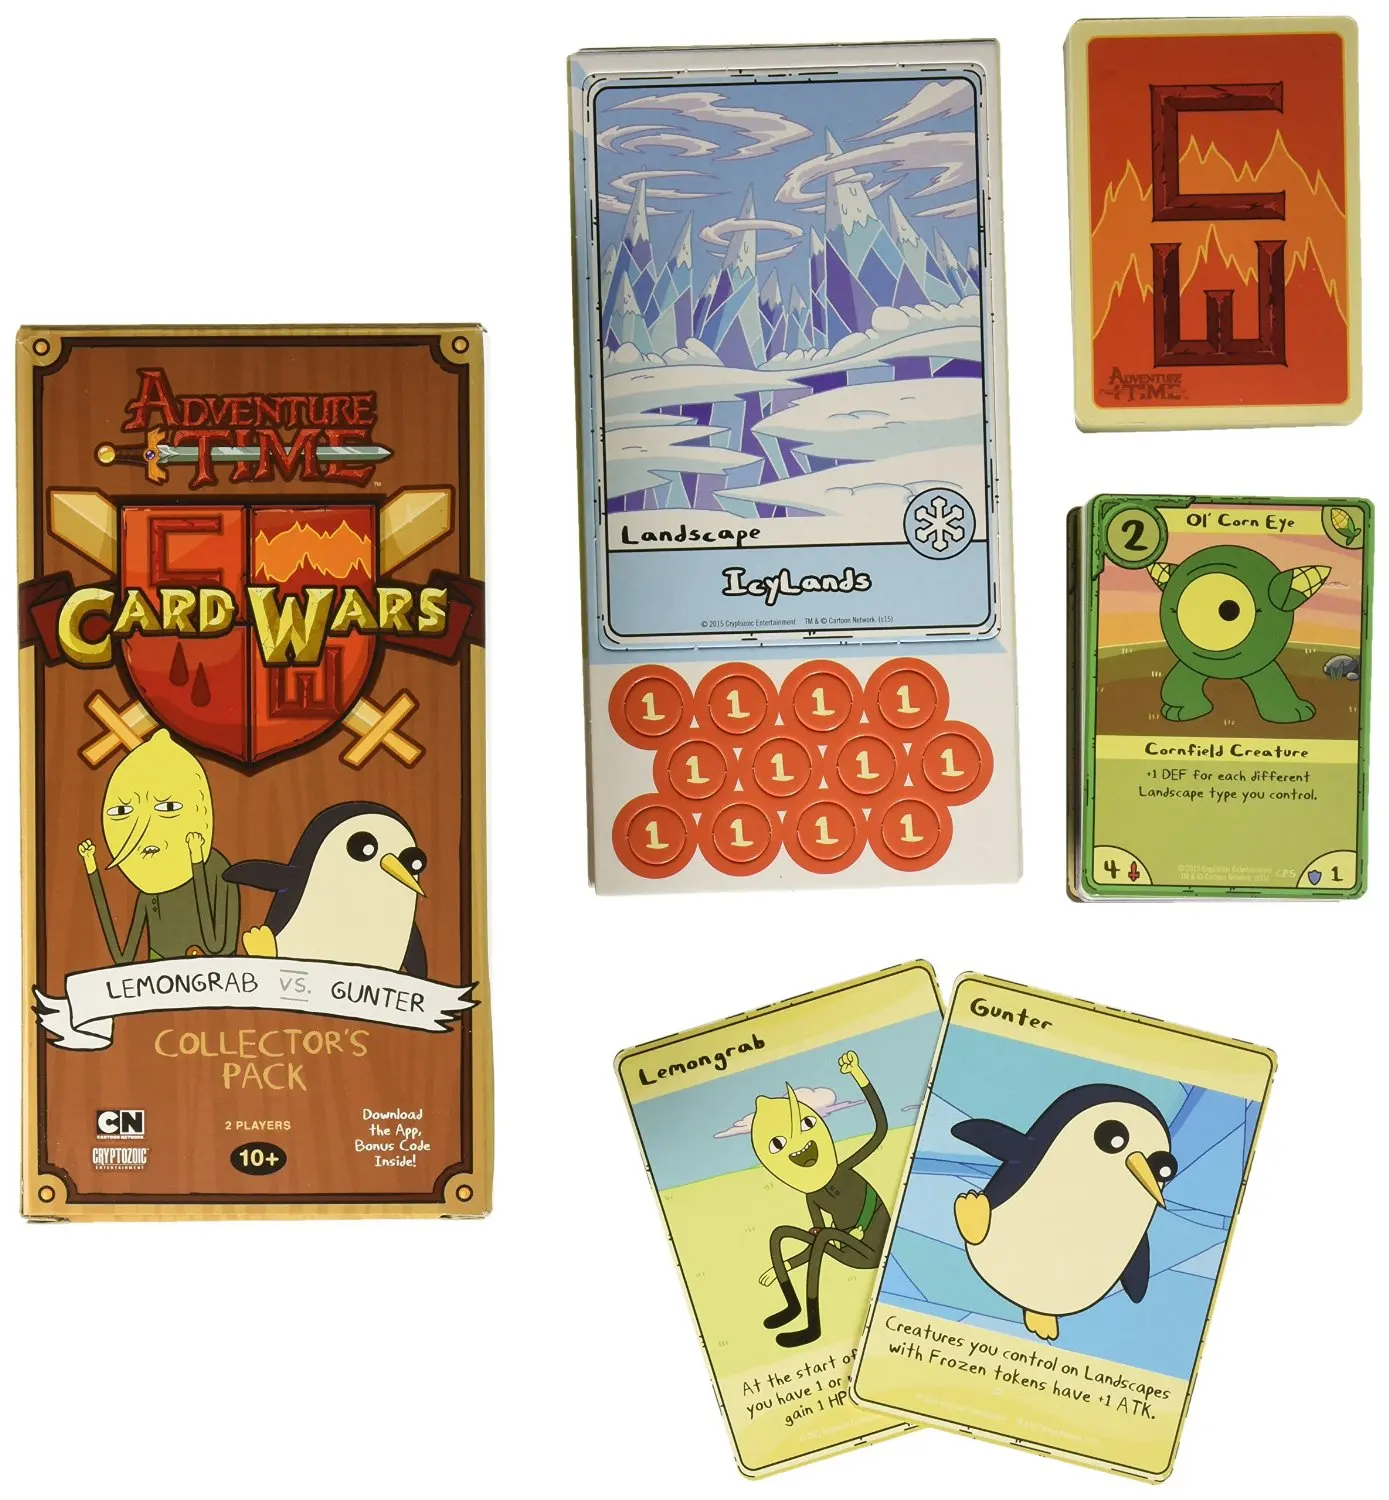 Adventure Time Card Wars - Amazon.com: Card Wars - Adventure Time Card